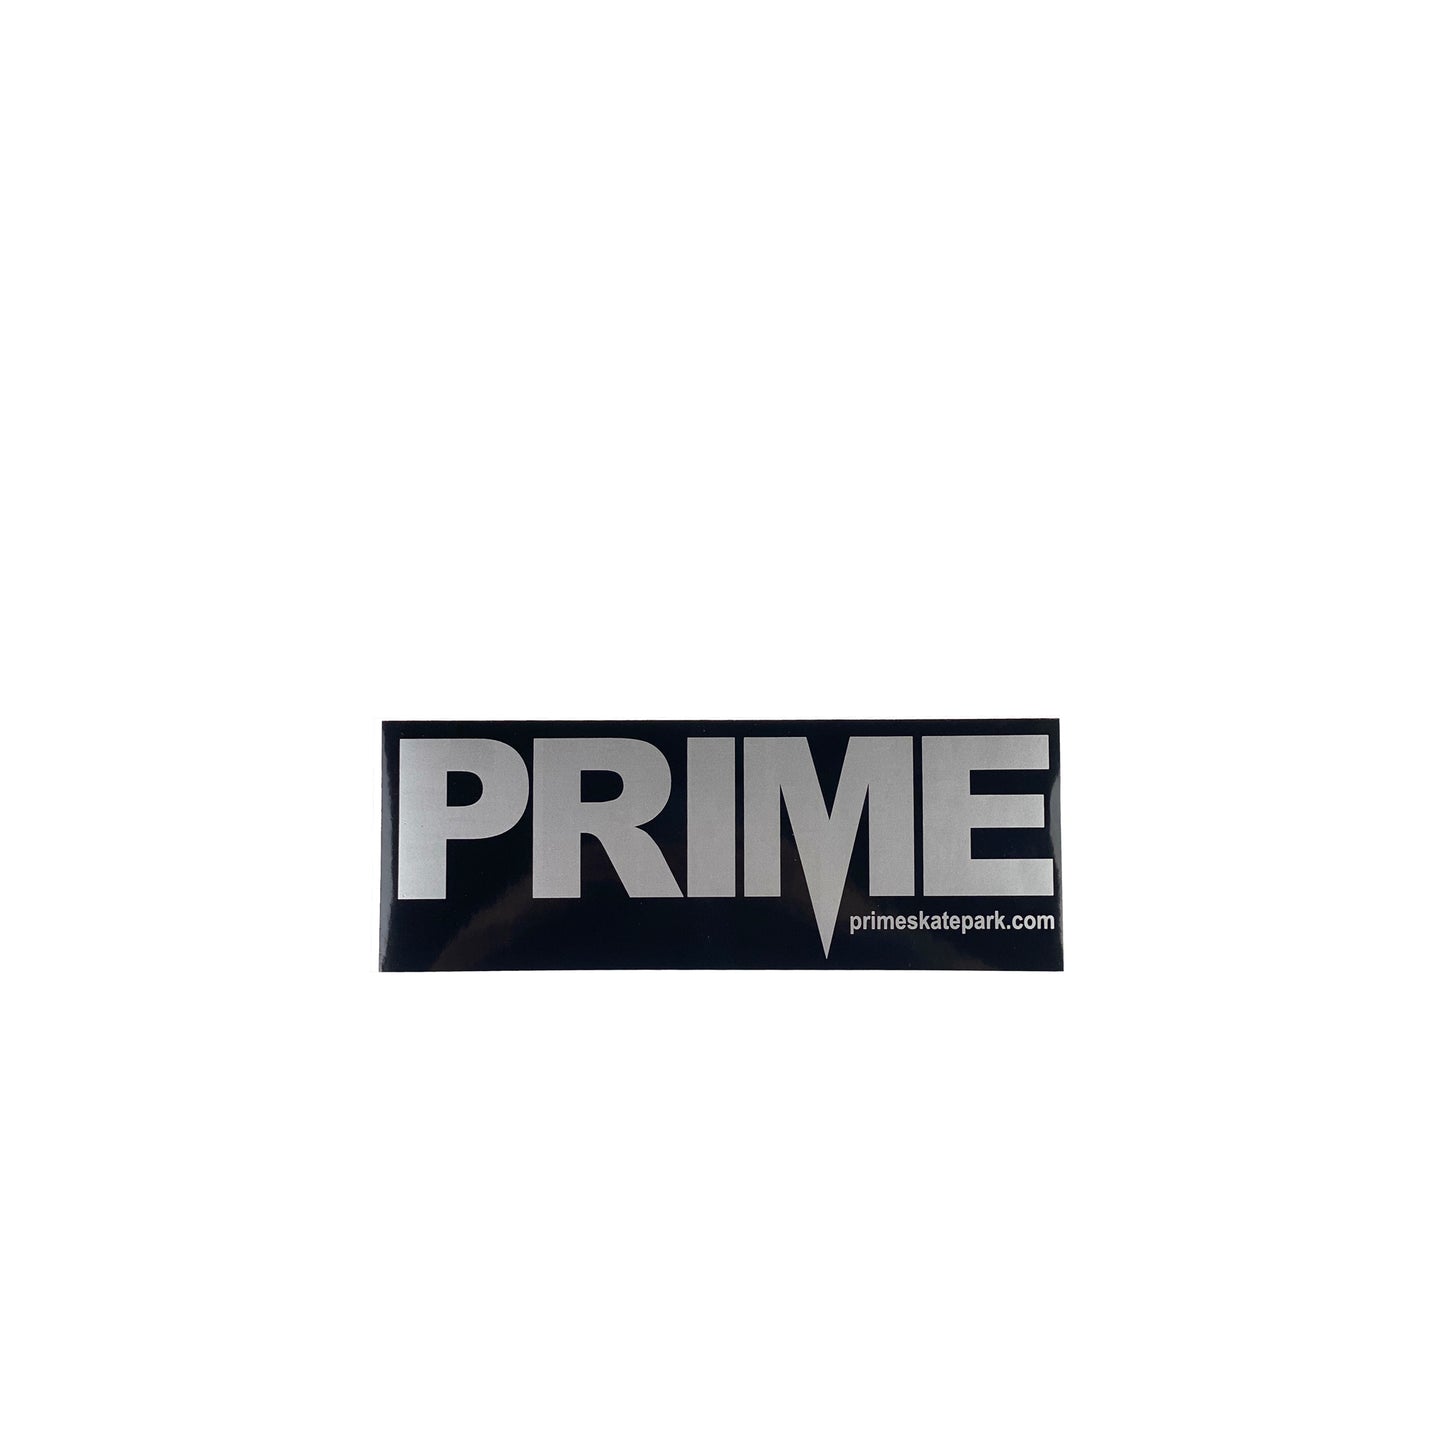 Prime Delux OG SP Sticker M - Black / Silver - Prime Delux Store